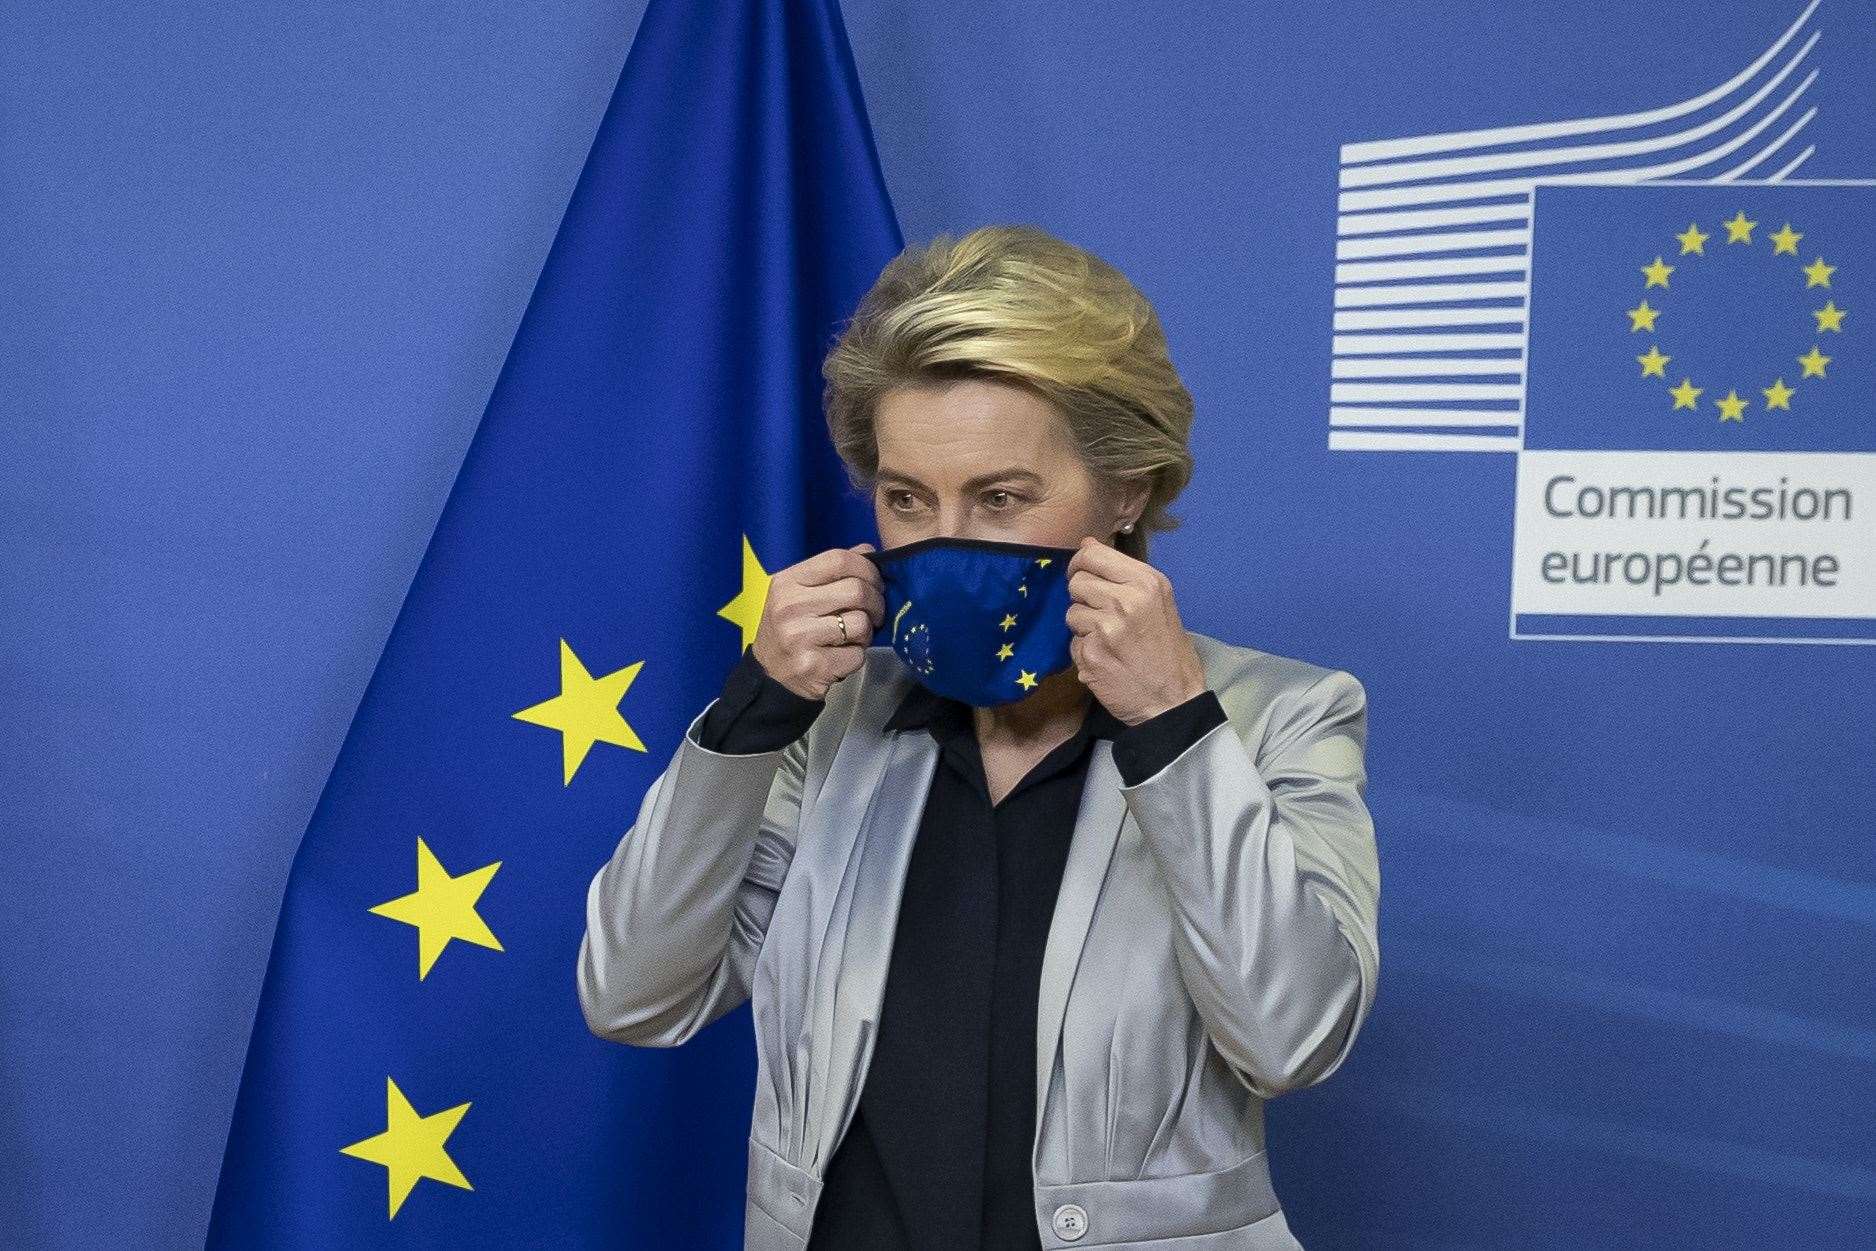 Ursula von der Leyen: European Commission president who runs a tight ship